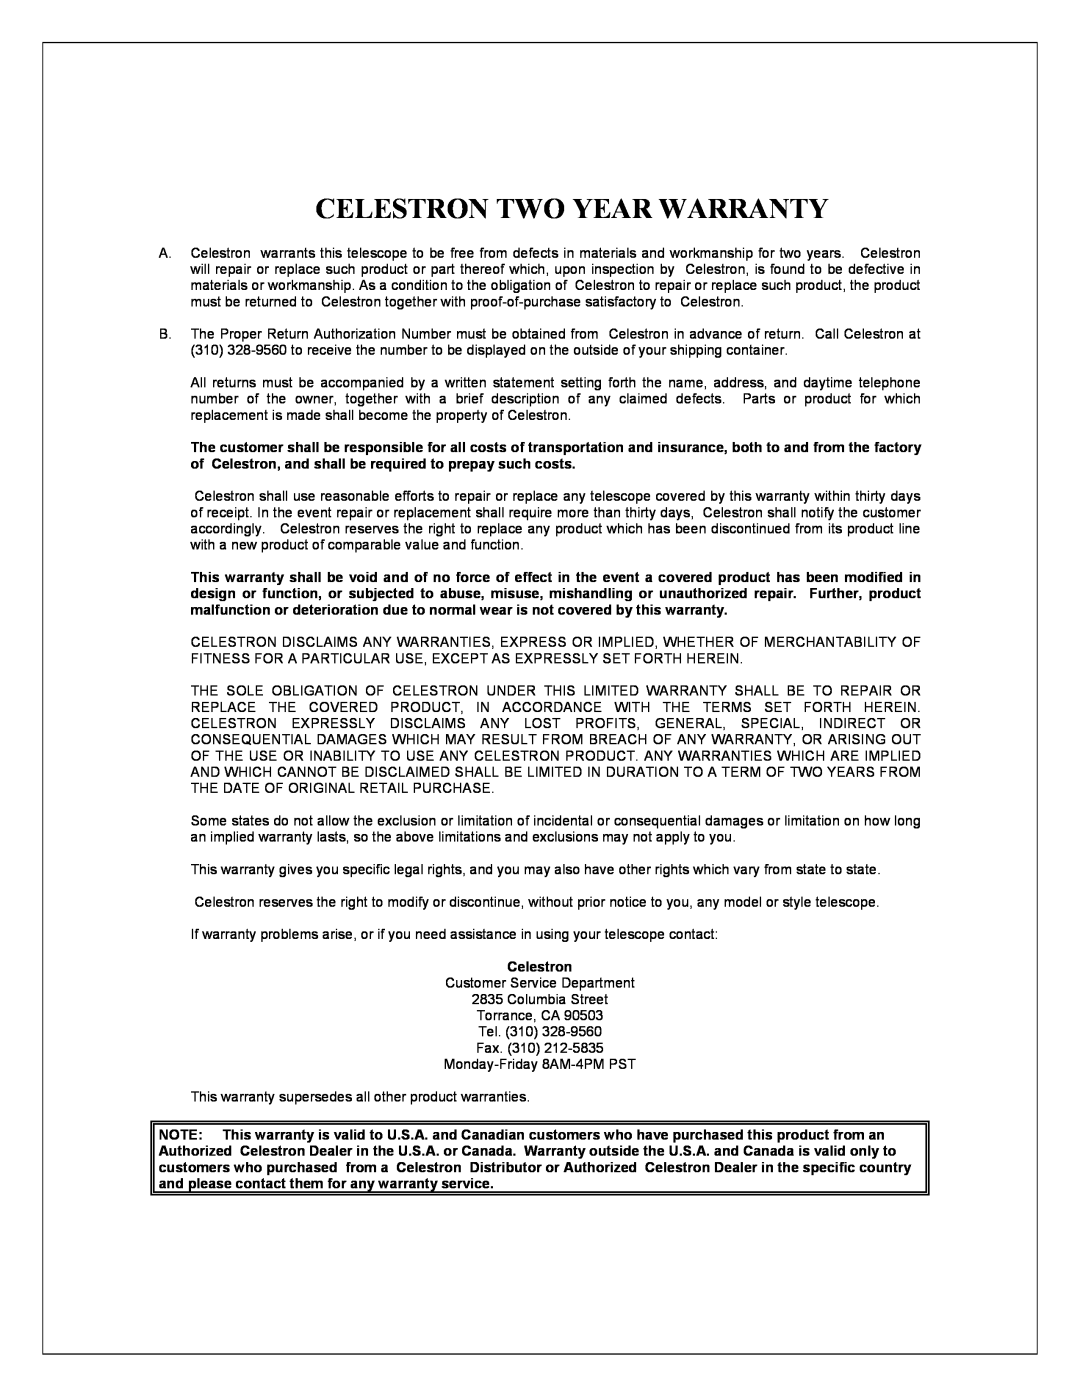 Celestron NexStar 8i manual Celestron Two Year Warranty 